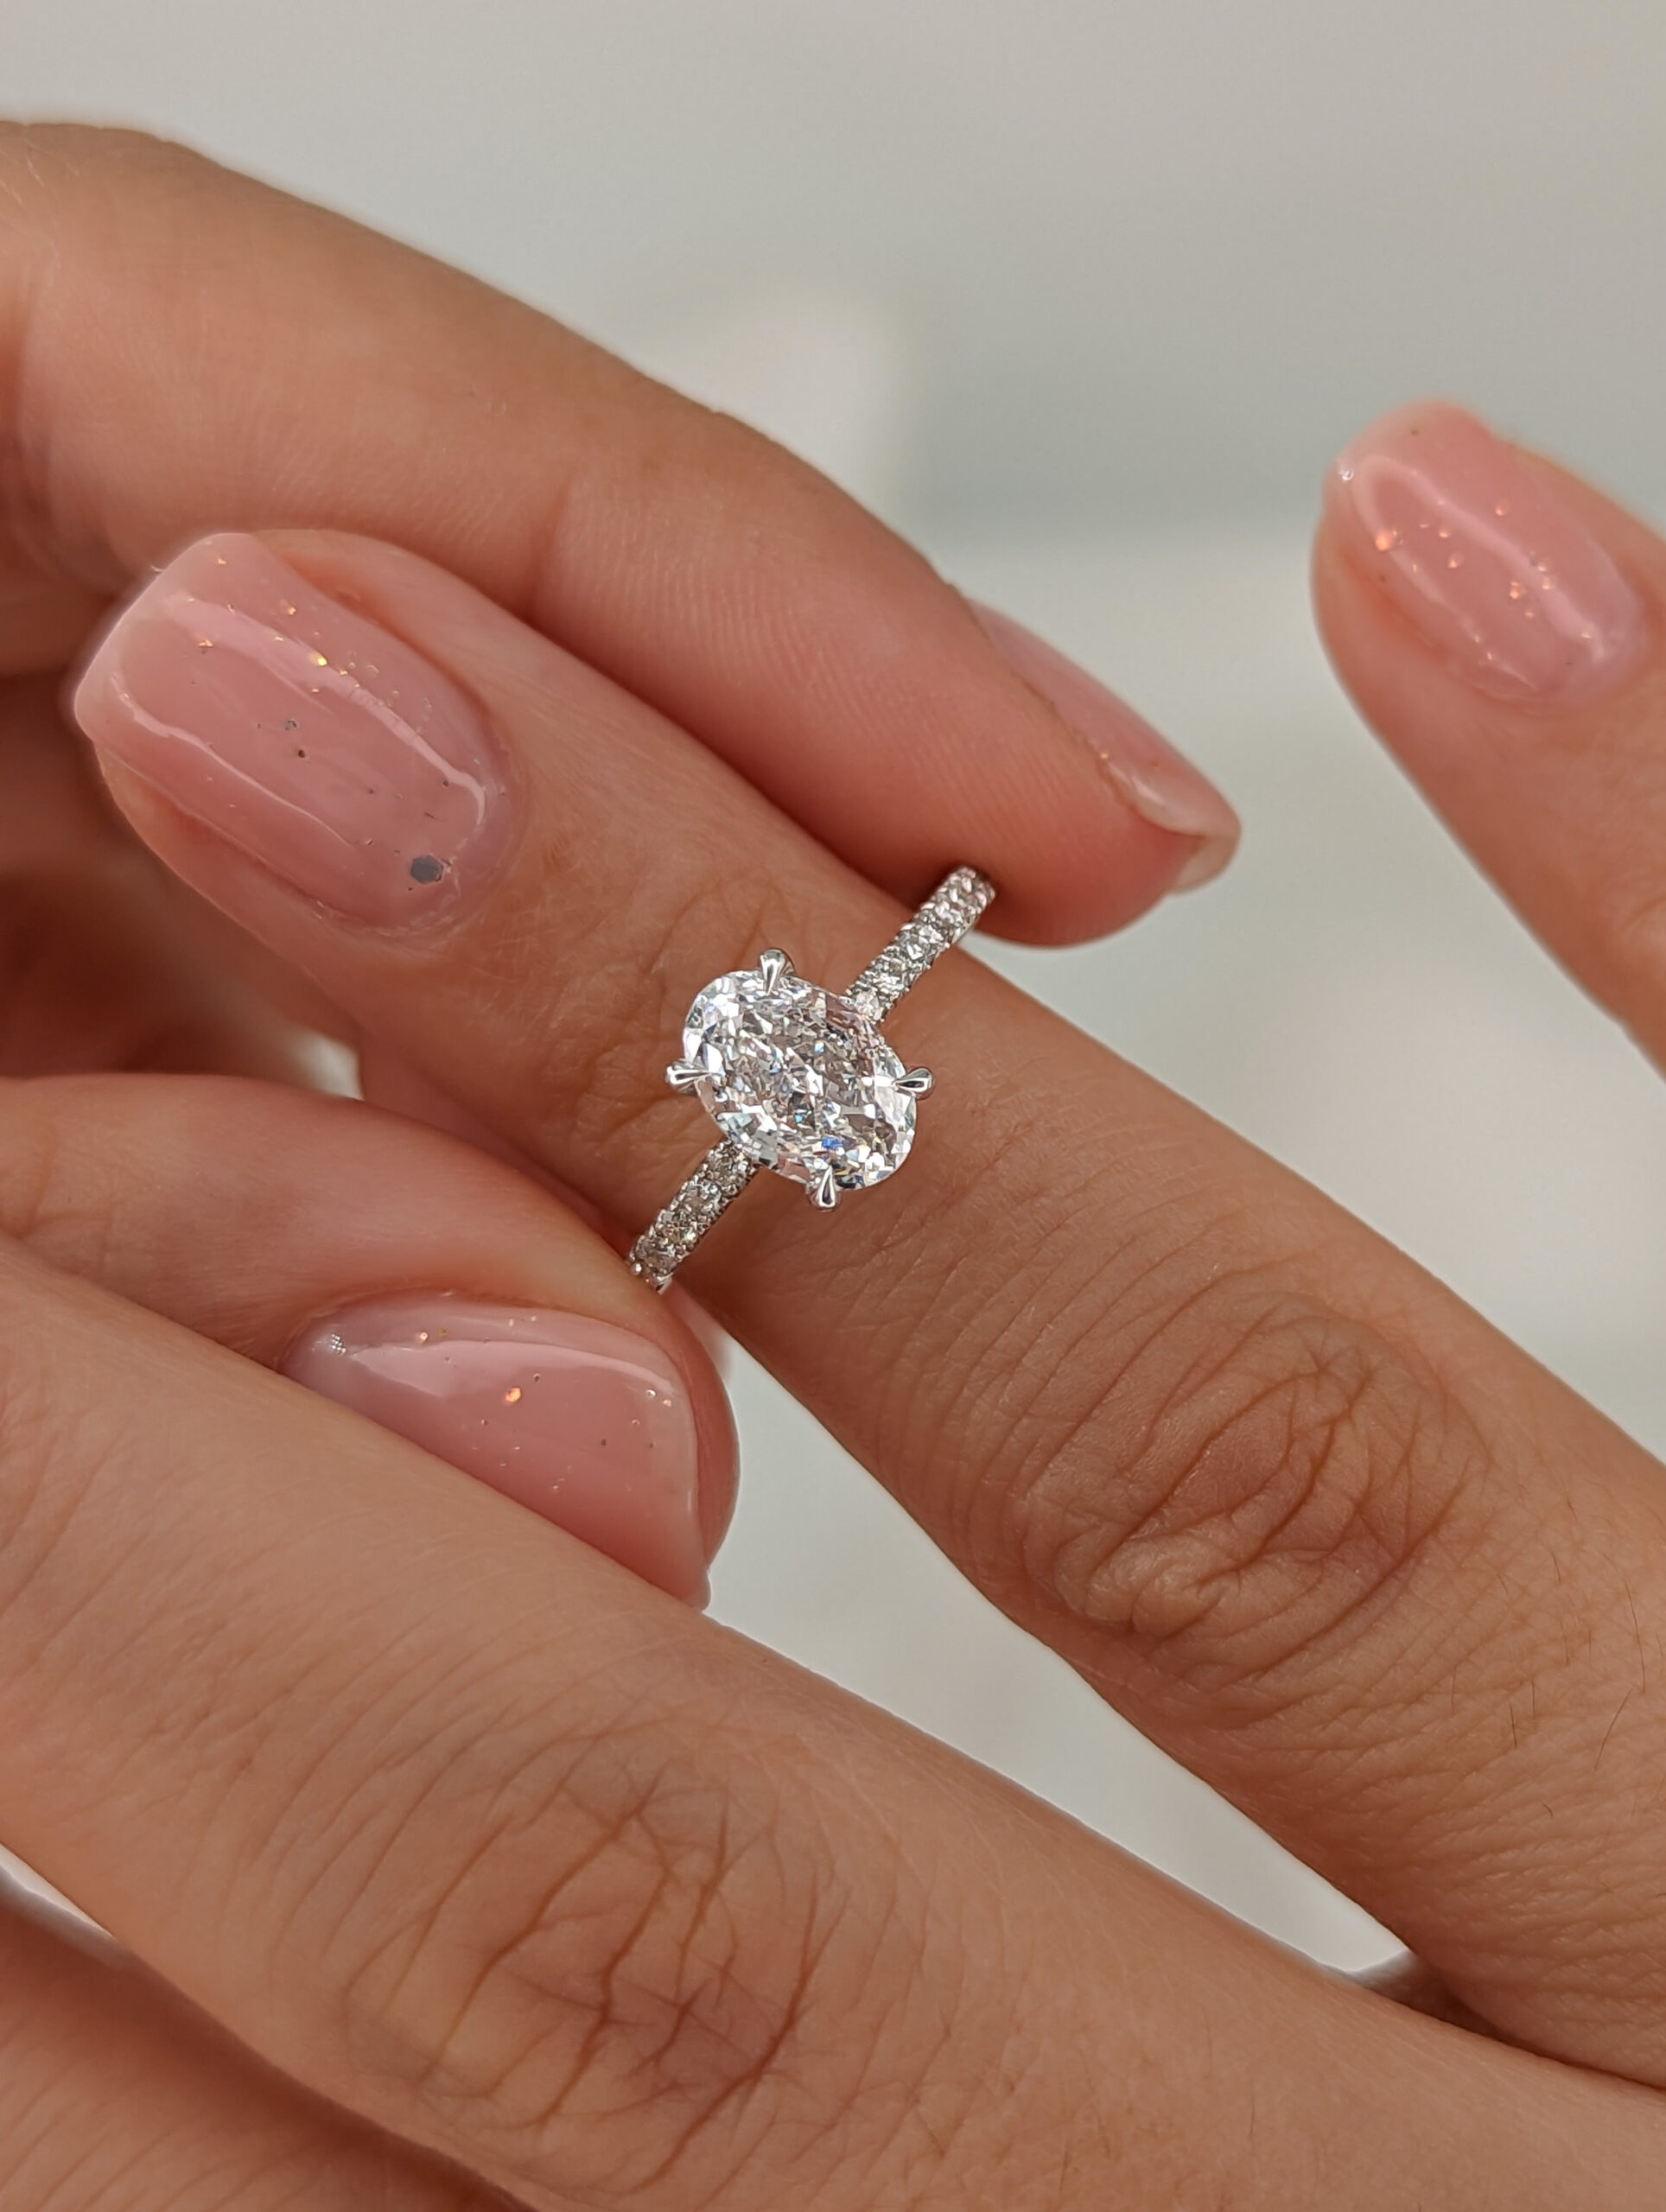 Oval Diamonds - Why Should You Buy Them - Adiamor Blog